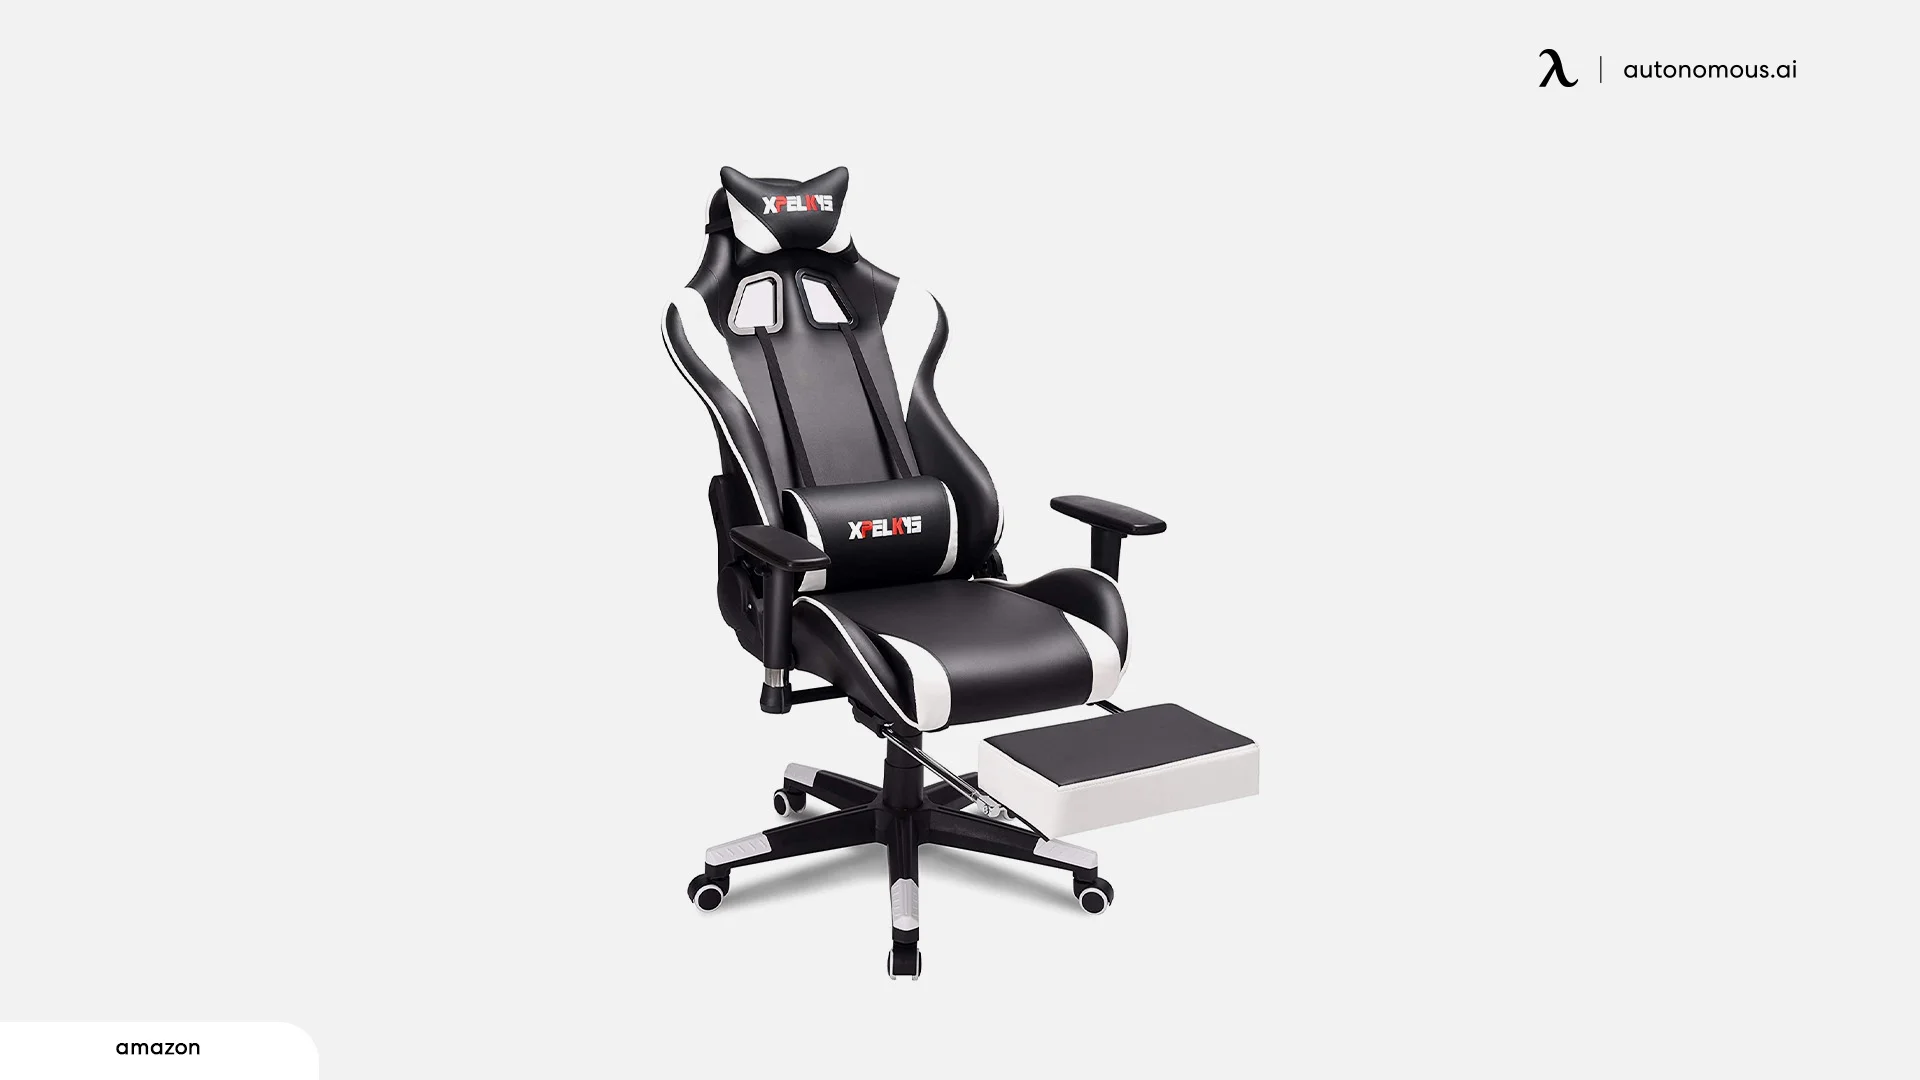 EDWELL Ergonomic Computer Gaming Chair